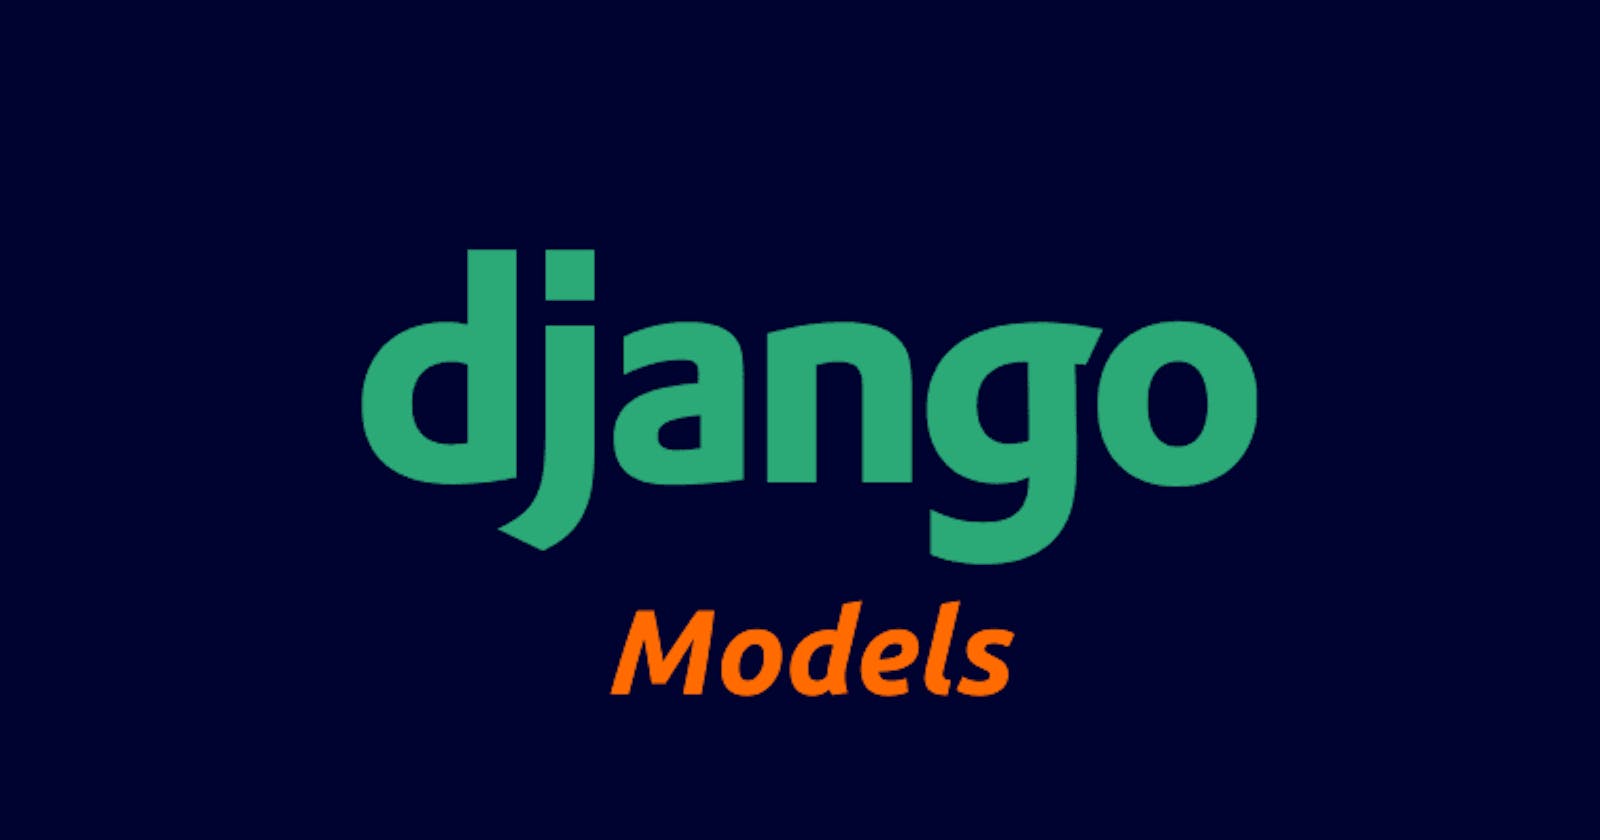 Models in Django